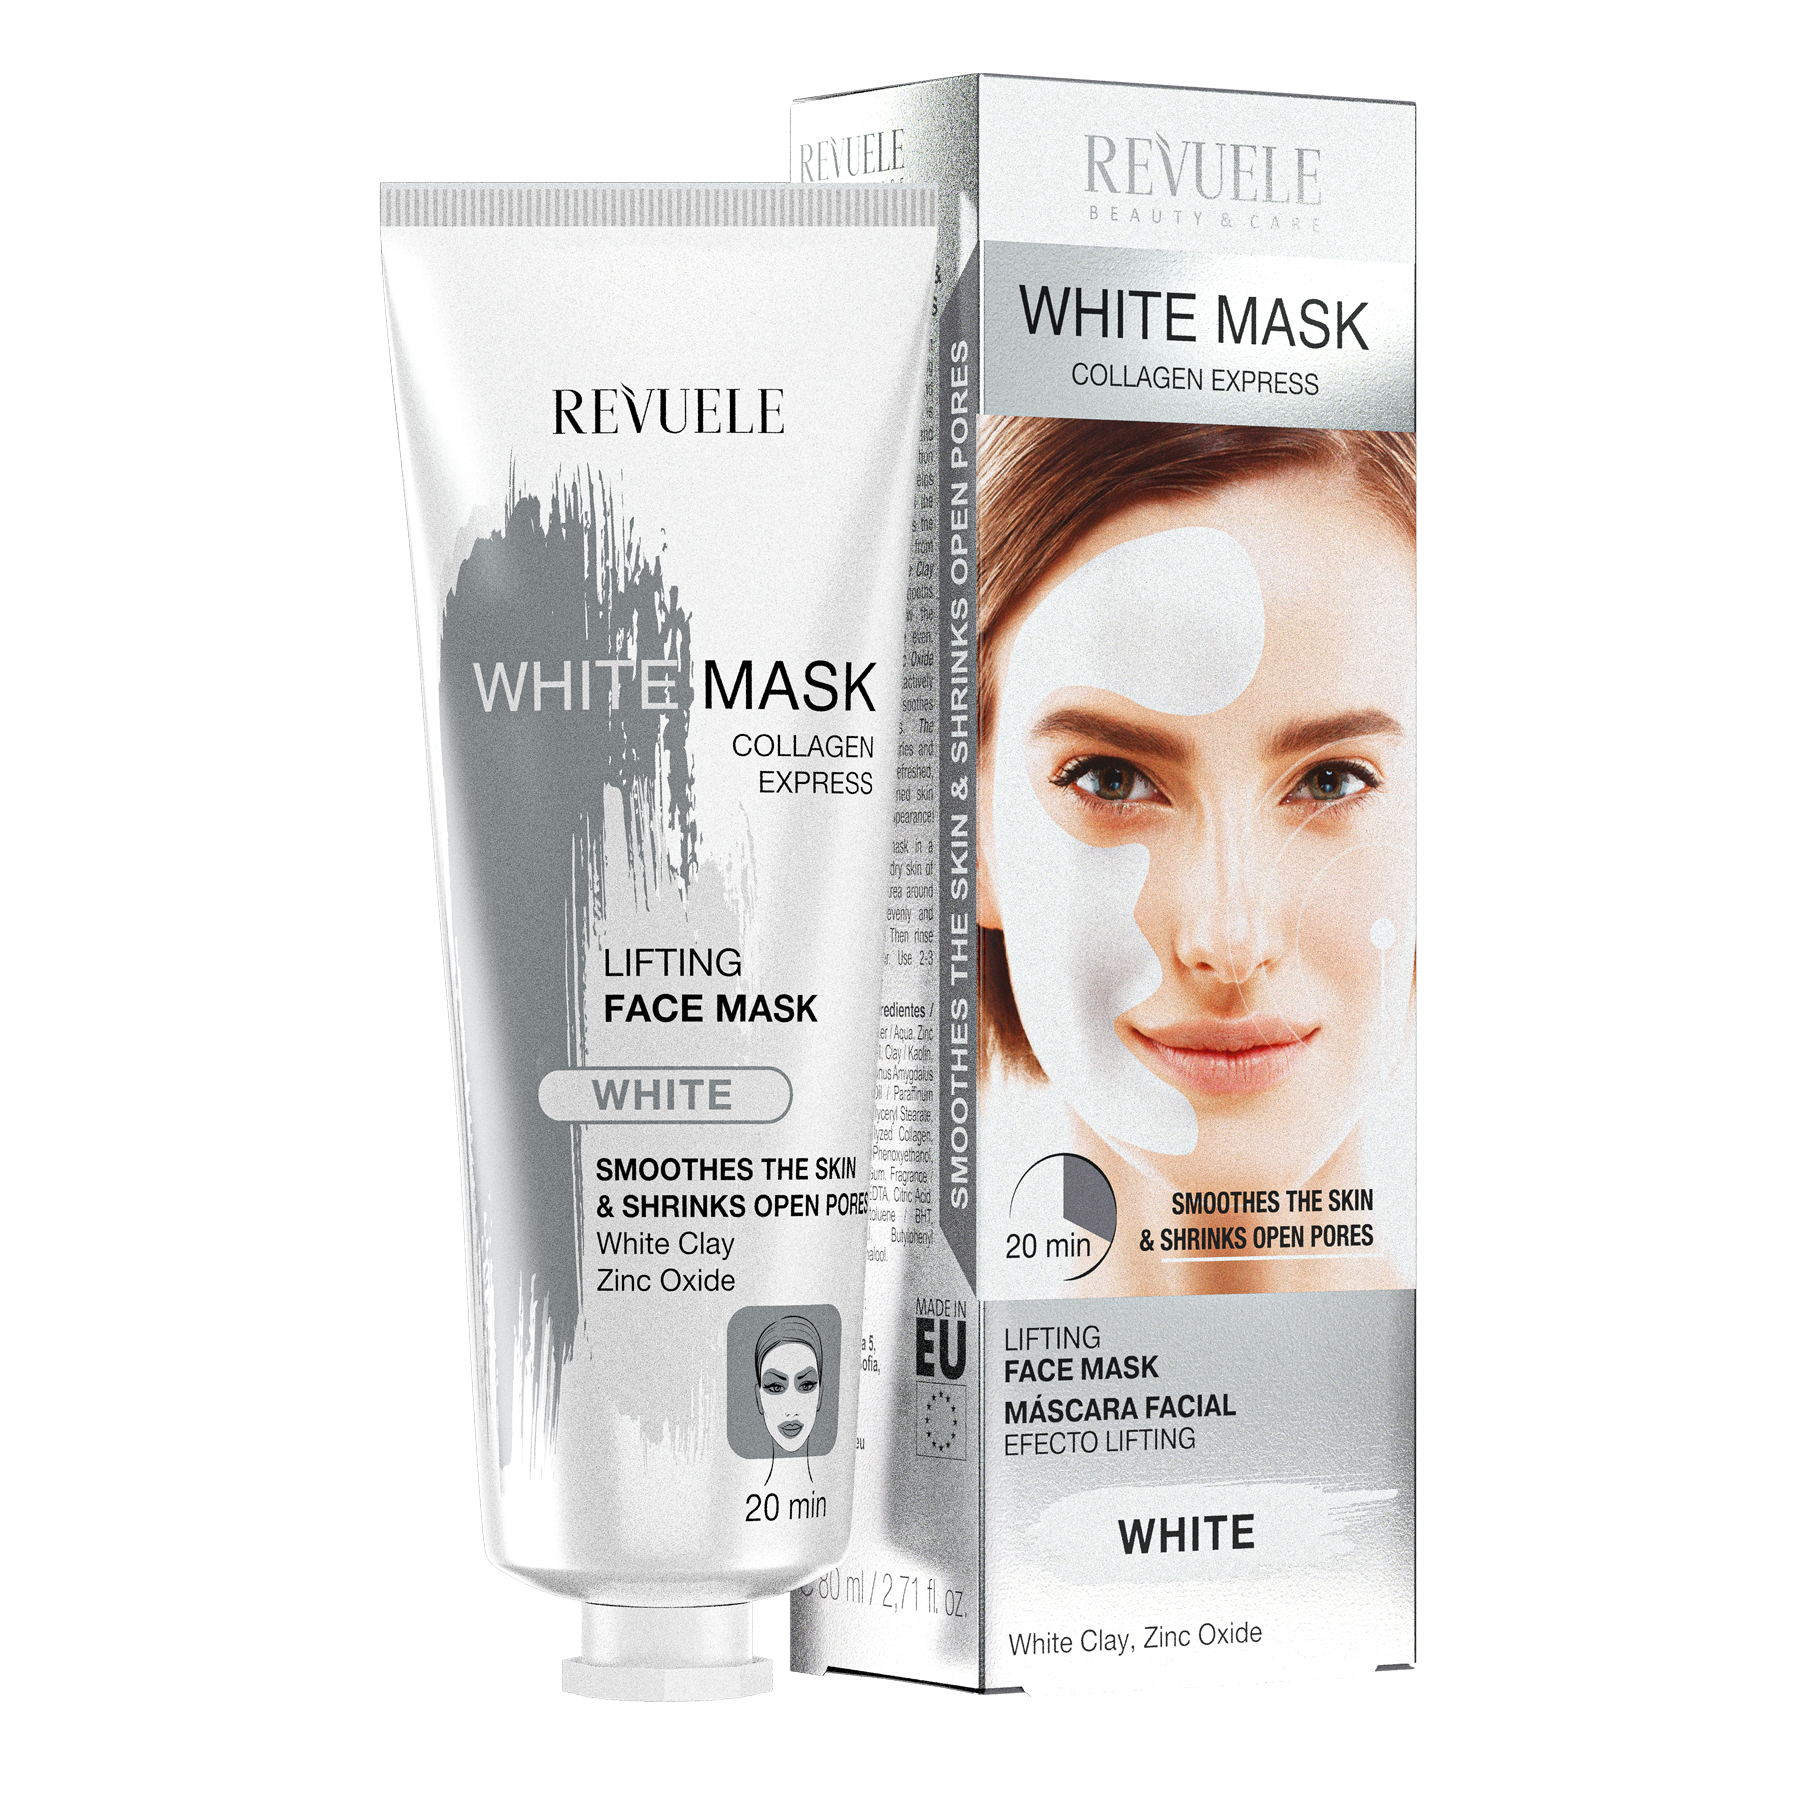 REVUELE WHITE MASK Collagen Express - 80 ml